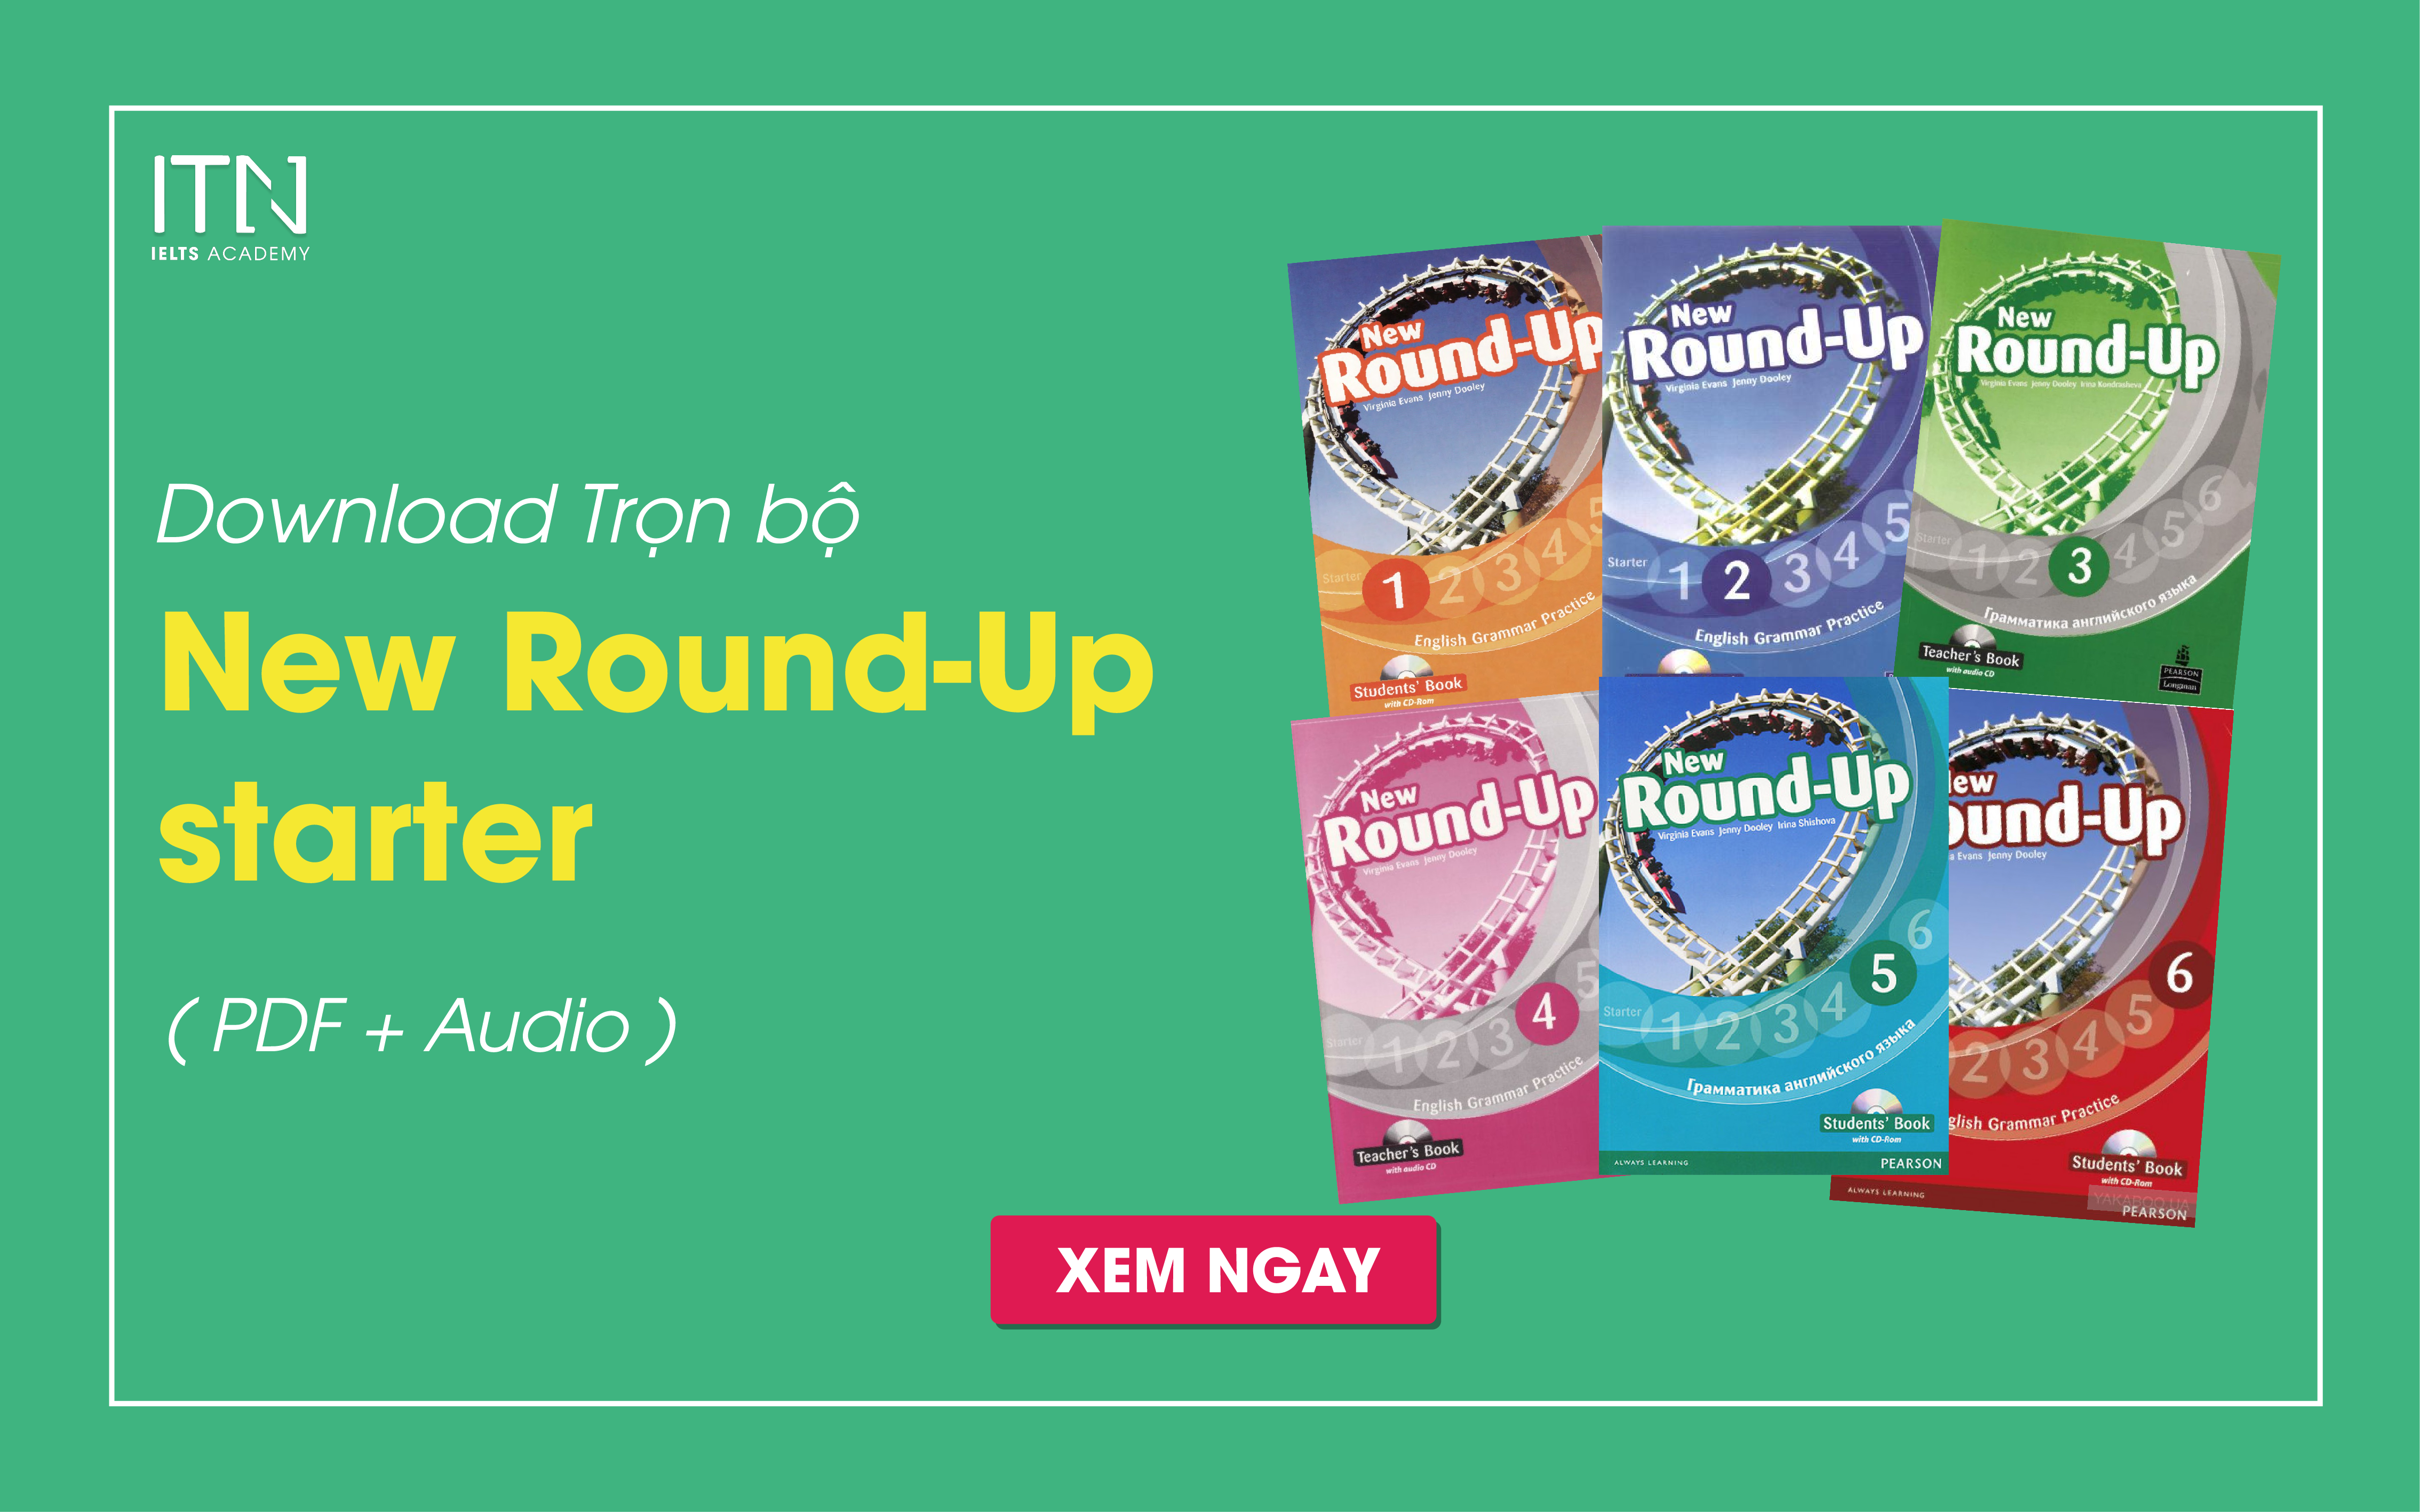 Download trọn bộ New Round-Up starter, 1,2,3,4,5,6 [PDF + Audio]